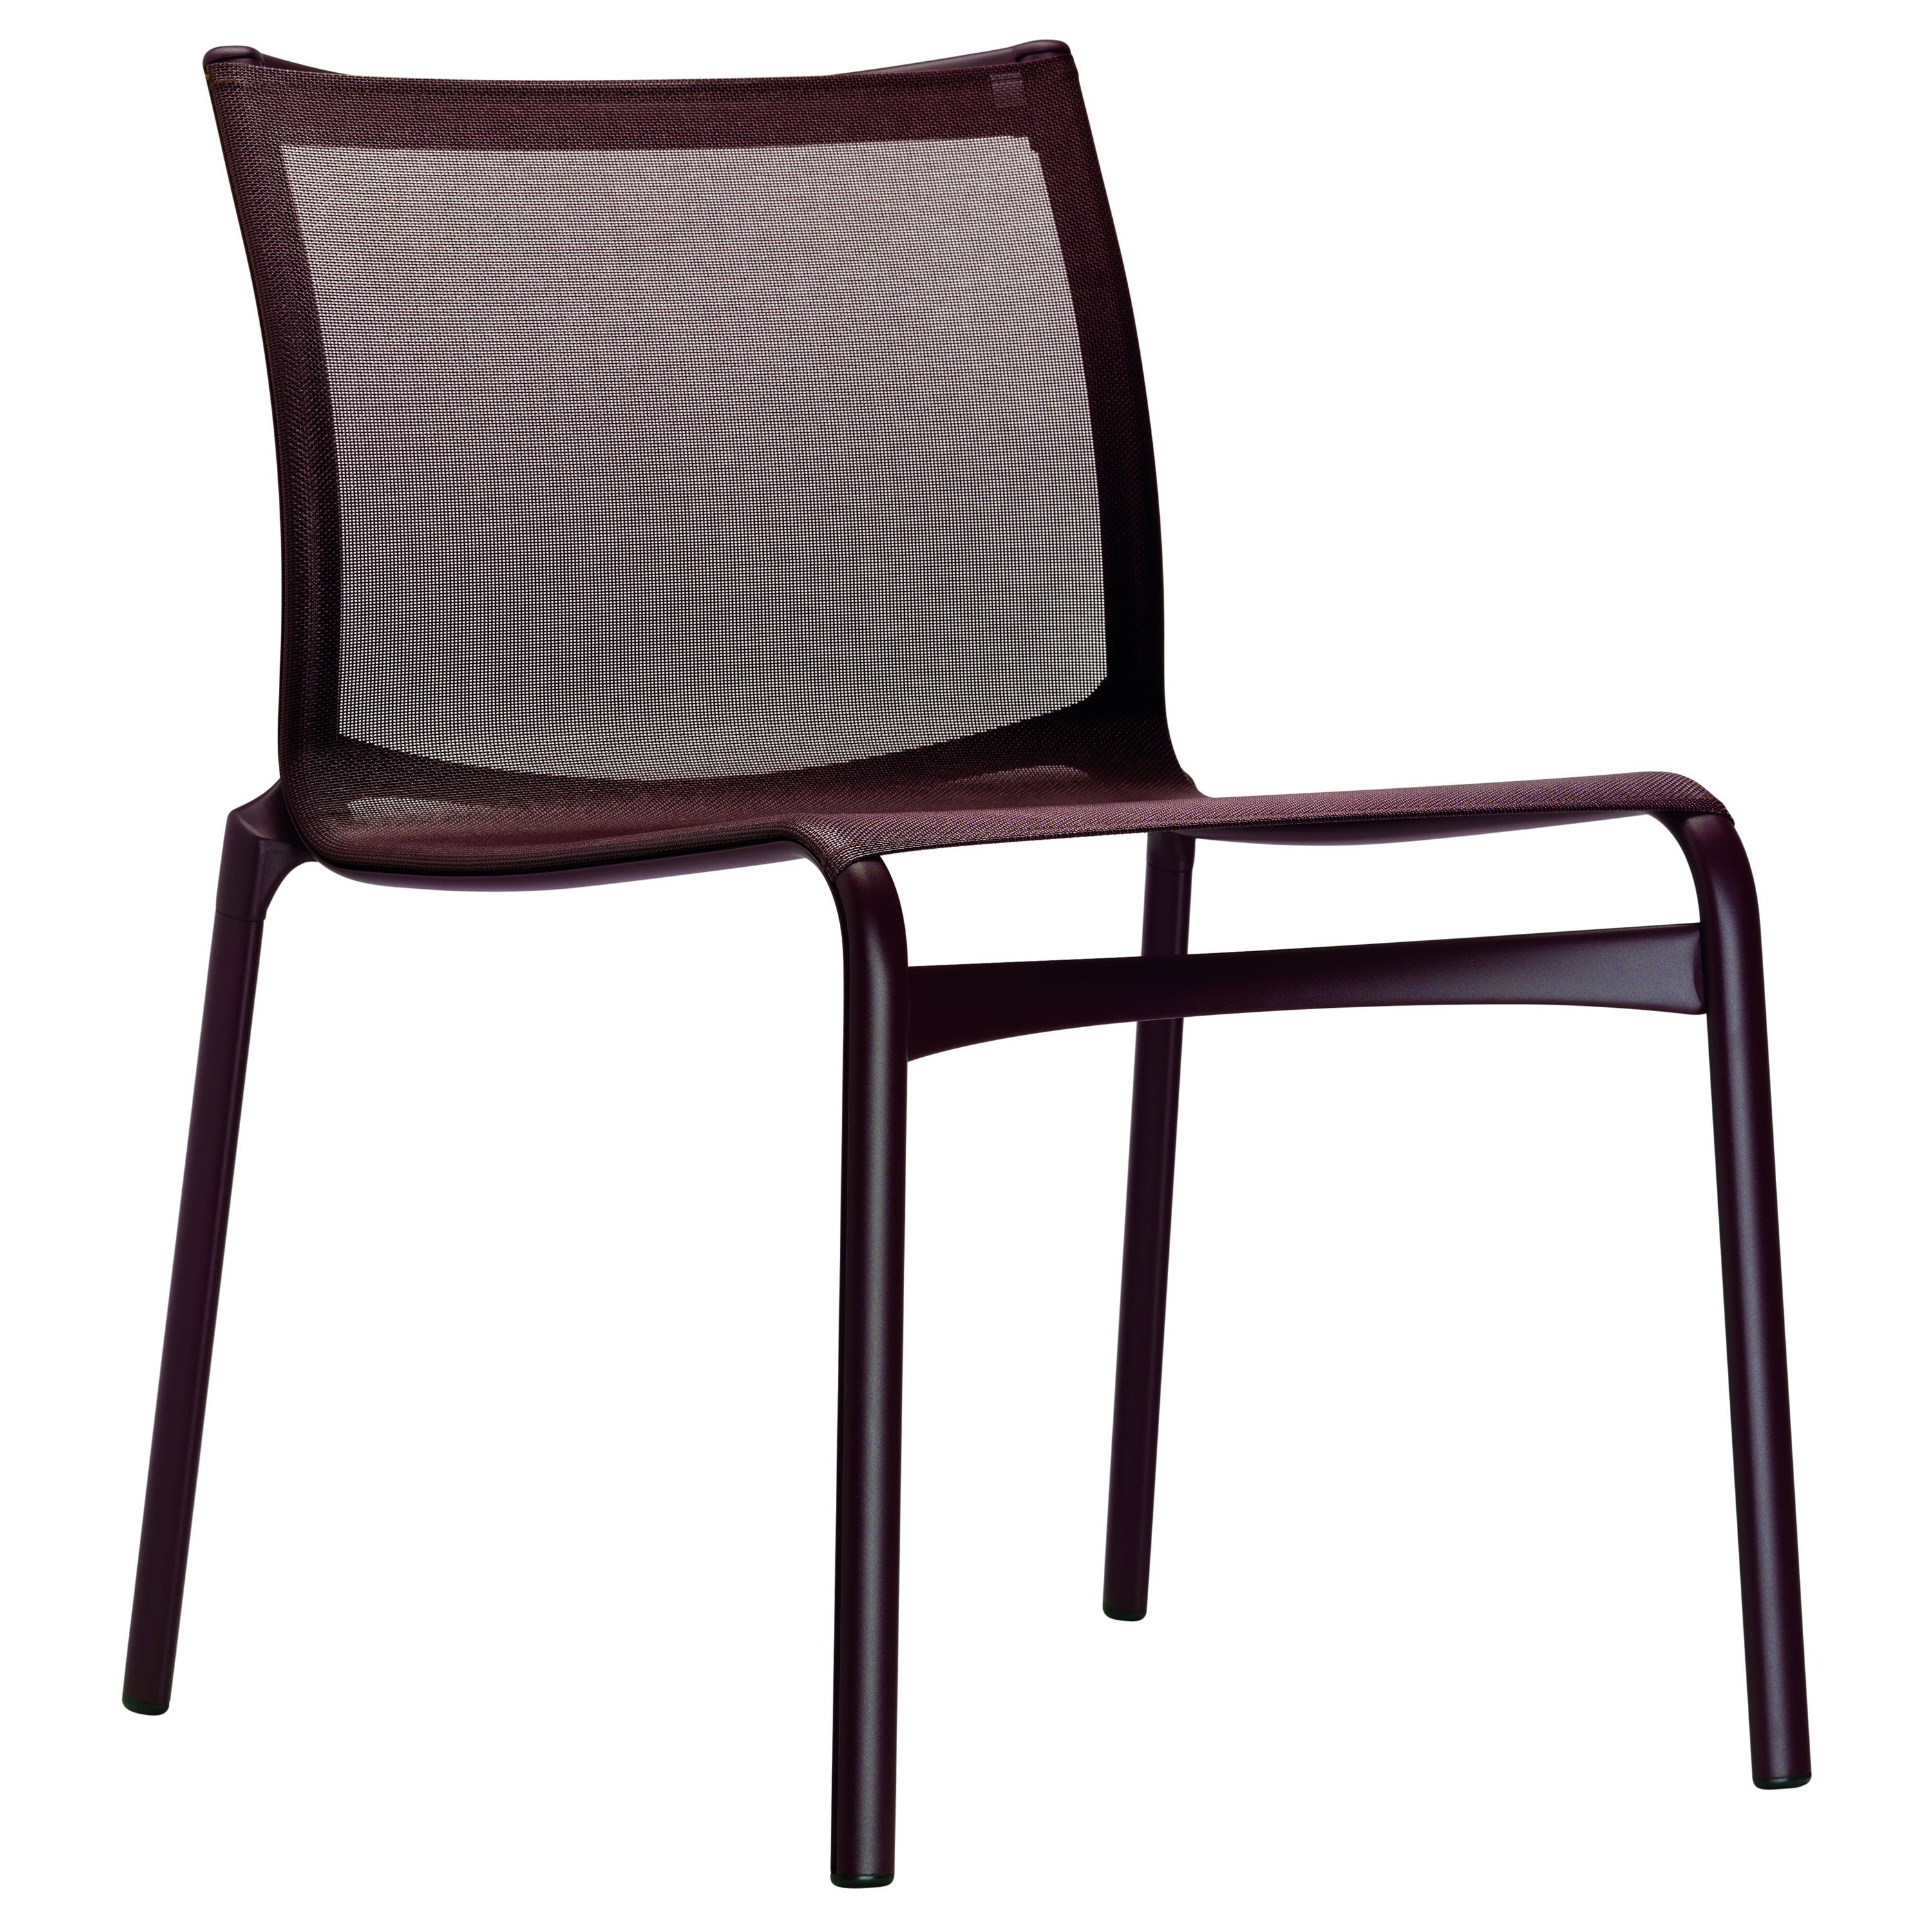 Alias Frame 52 Stuhl in Aubergine Mesh Sitz mit lackiertem Aluminiumrahmen